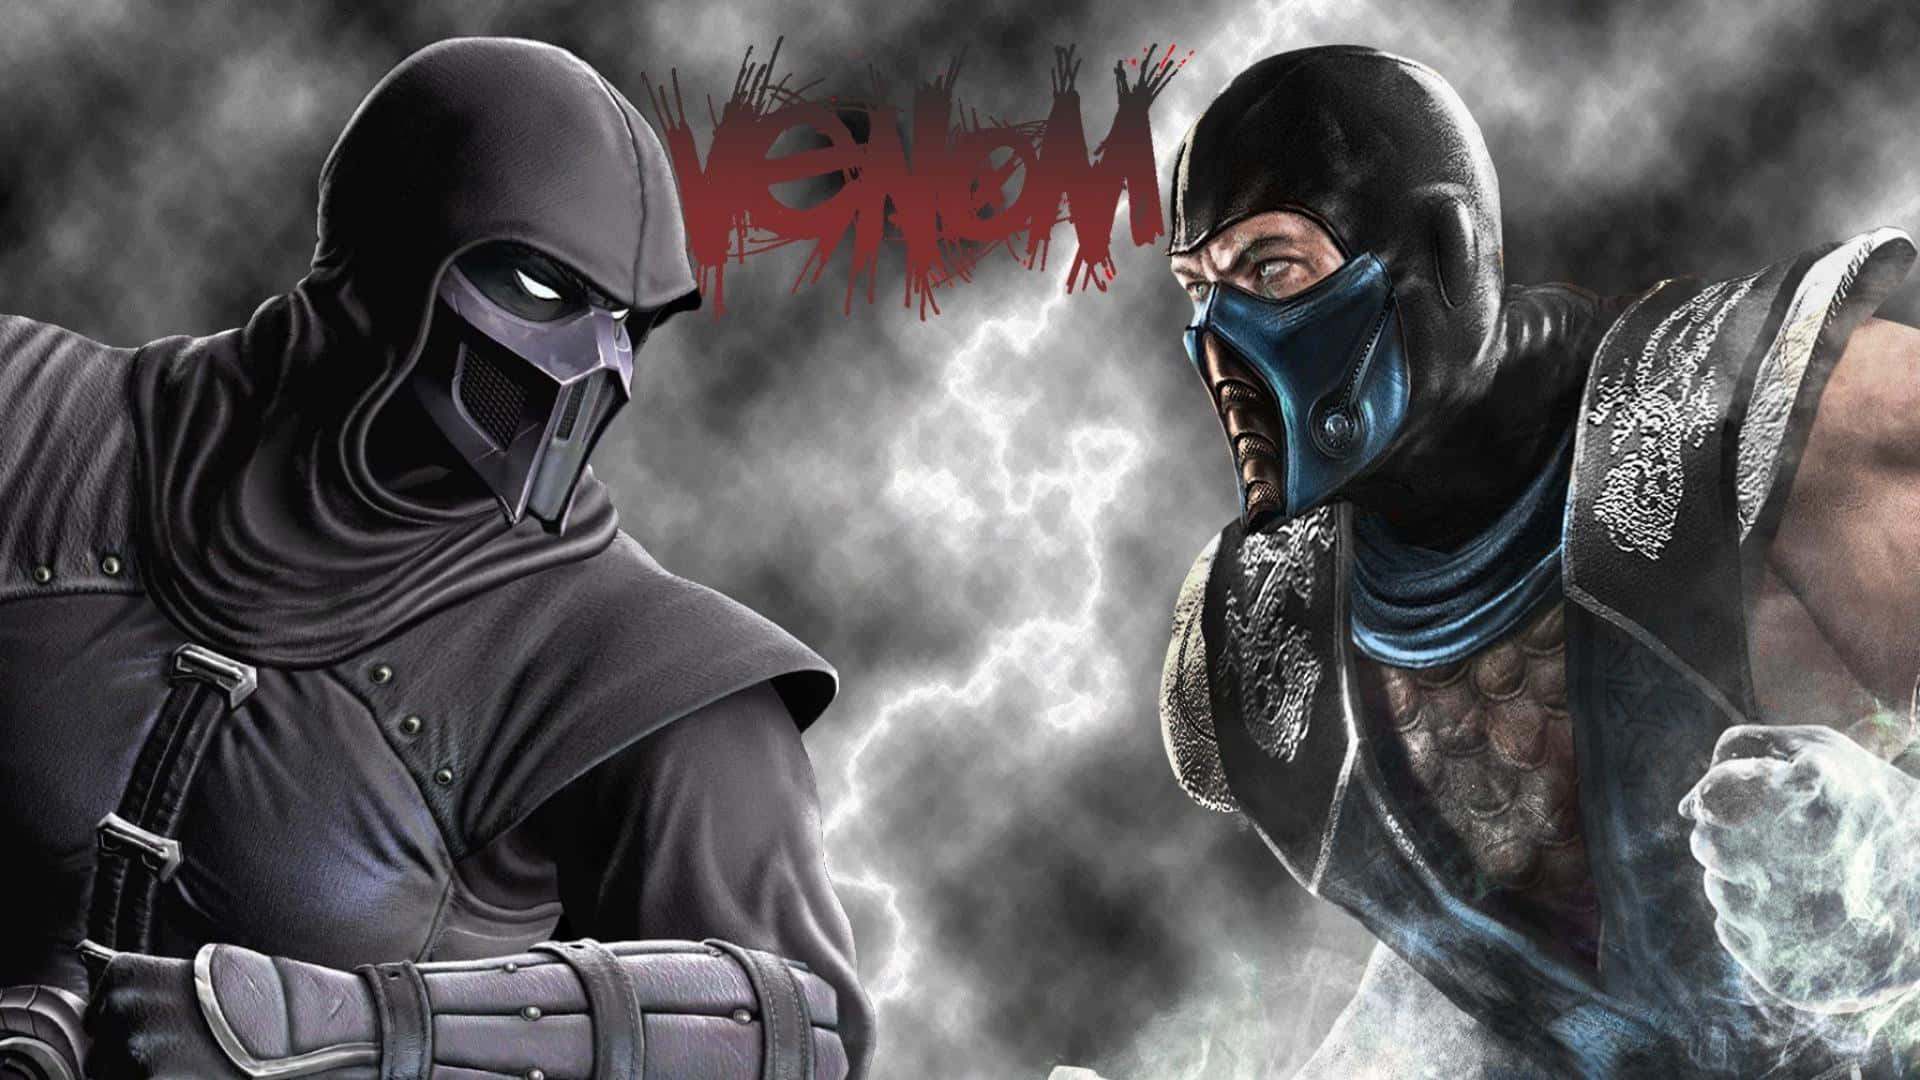 Noob saibot new victory scene pose Mortal Kombat aftermath mk11 - YouTube